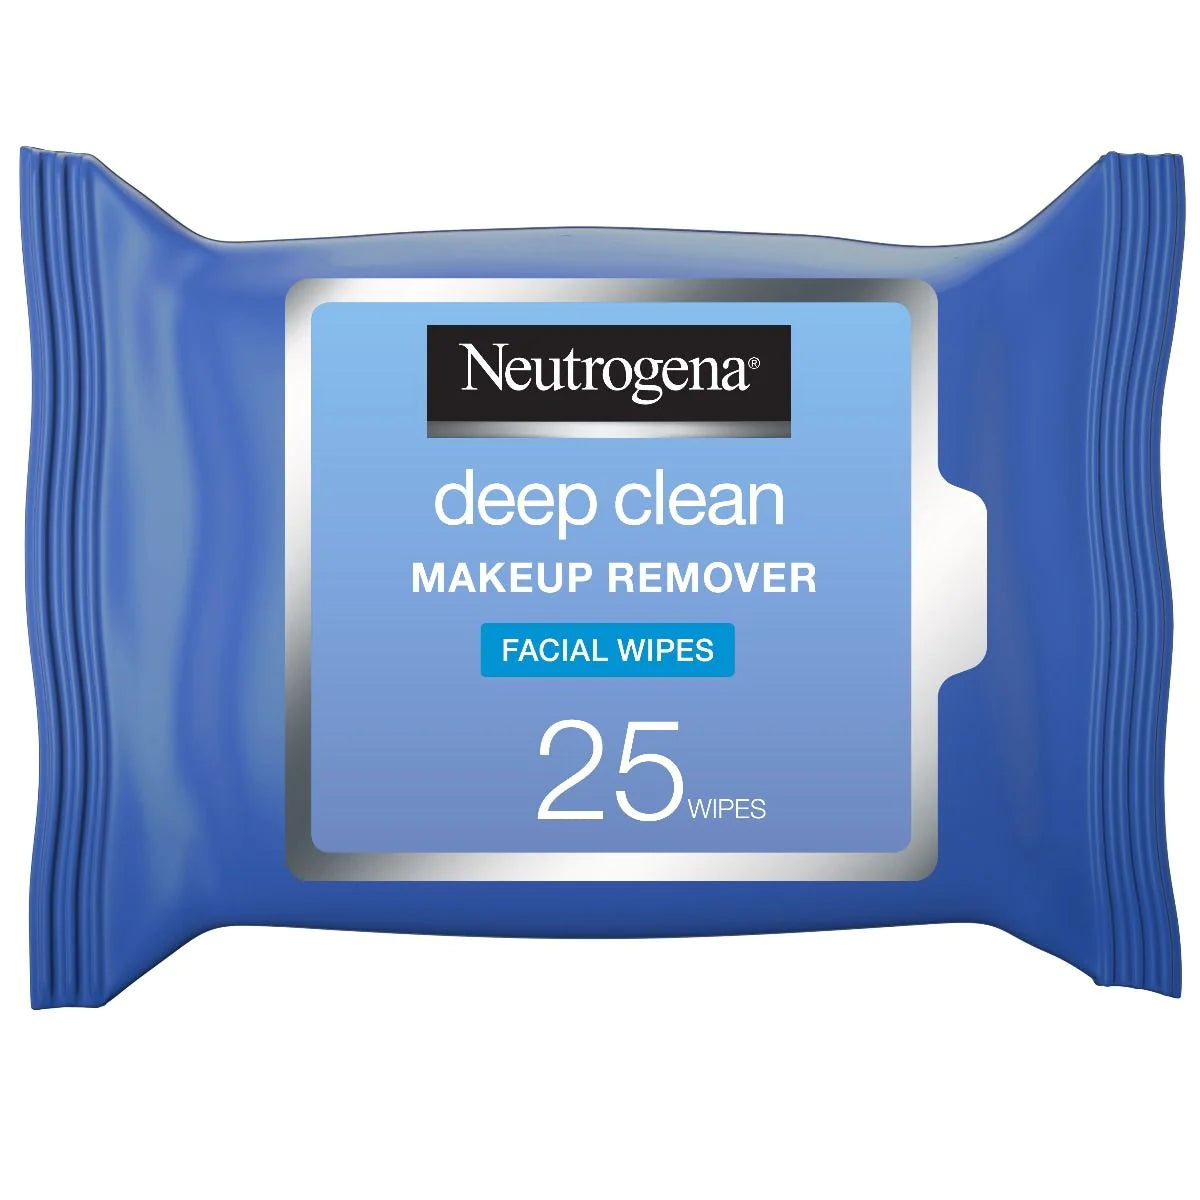 Neutrogena Deep Clean Makeup Remover 25 Facial Wipes